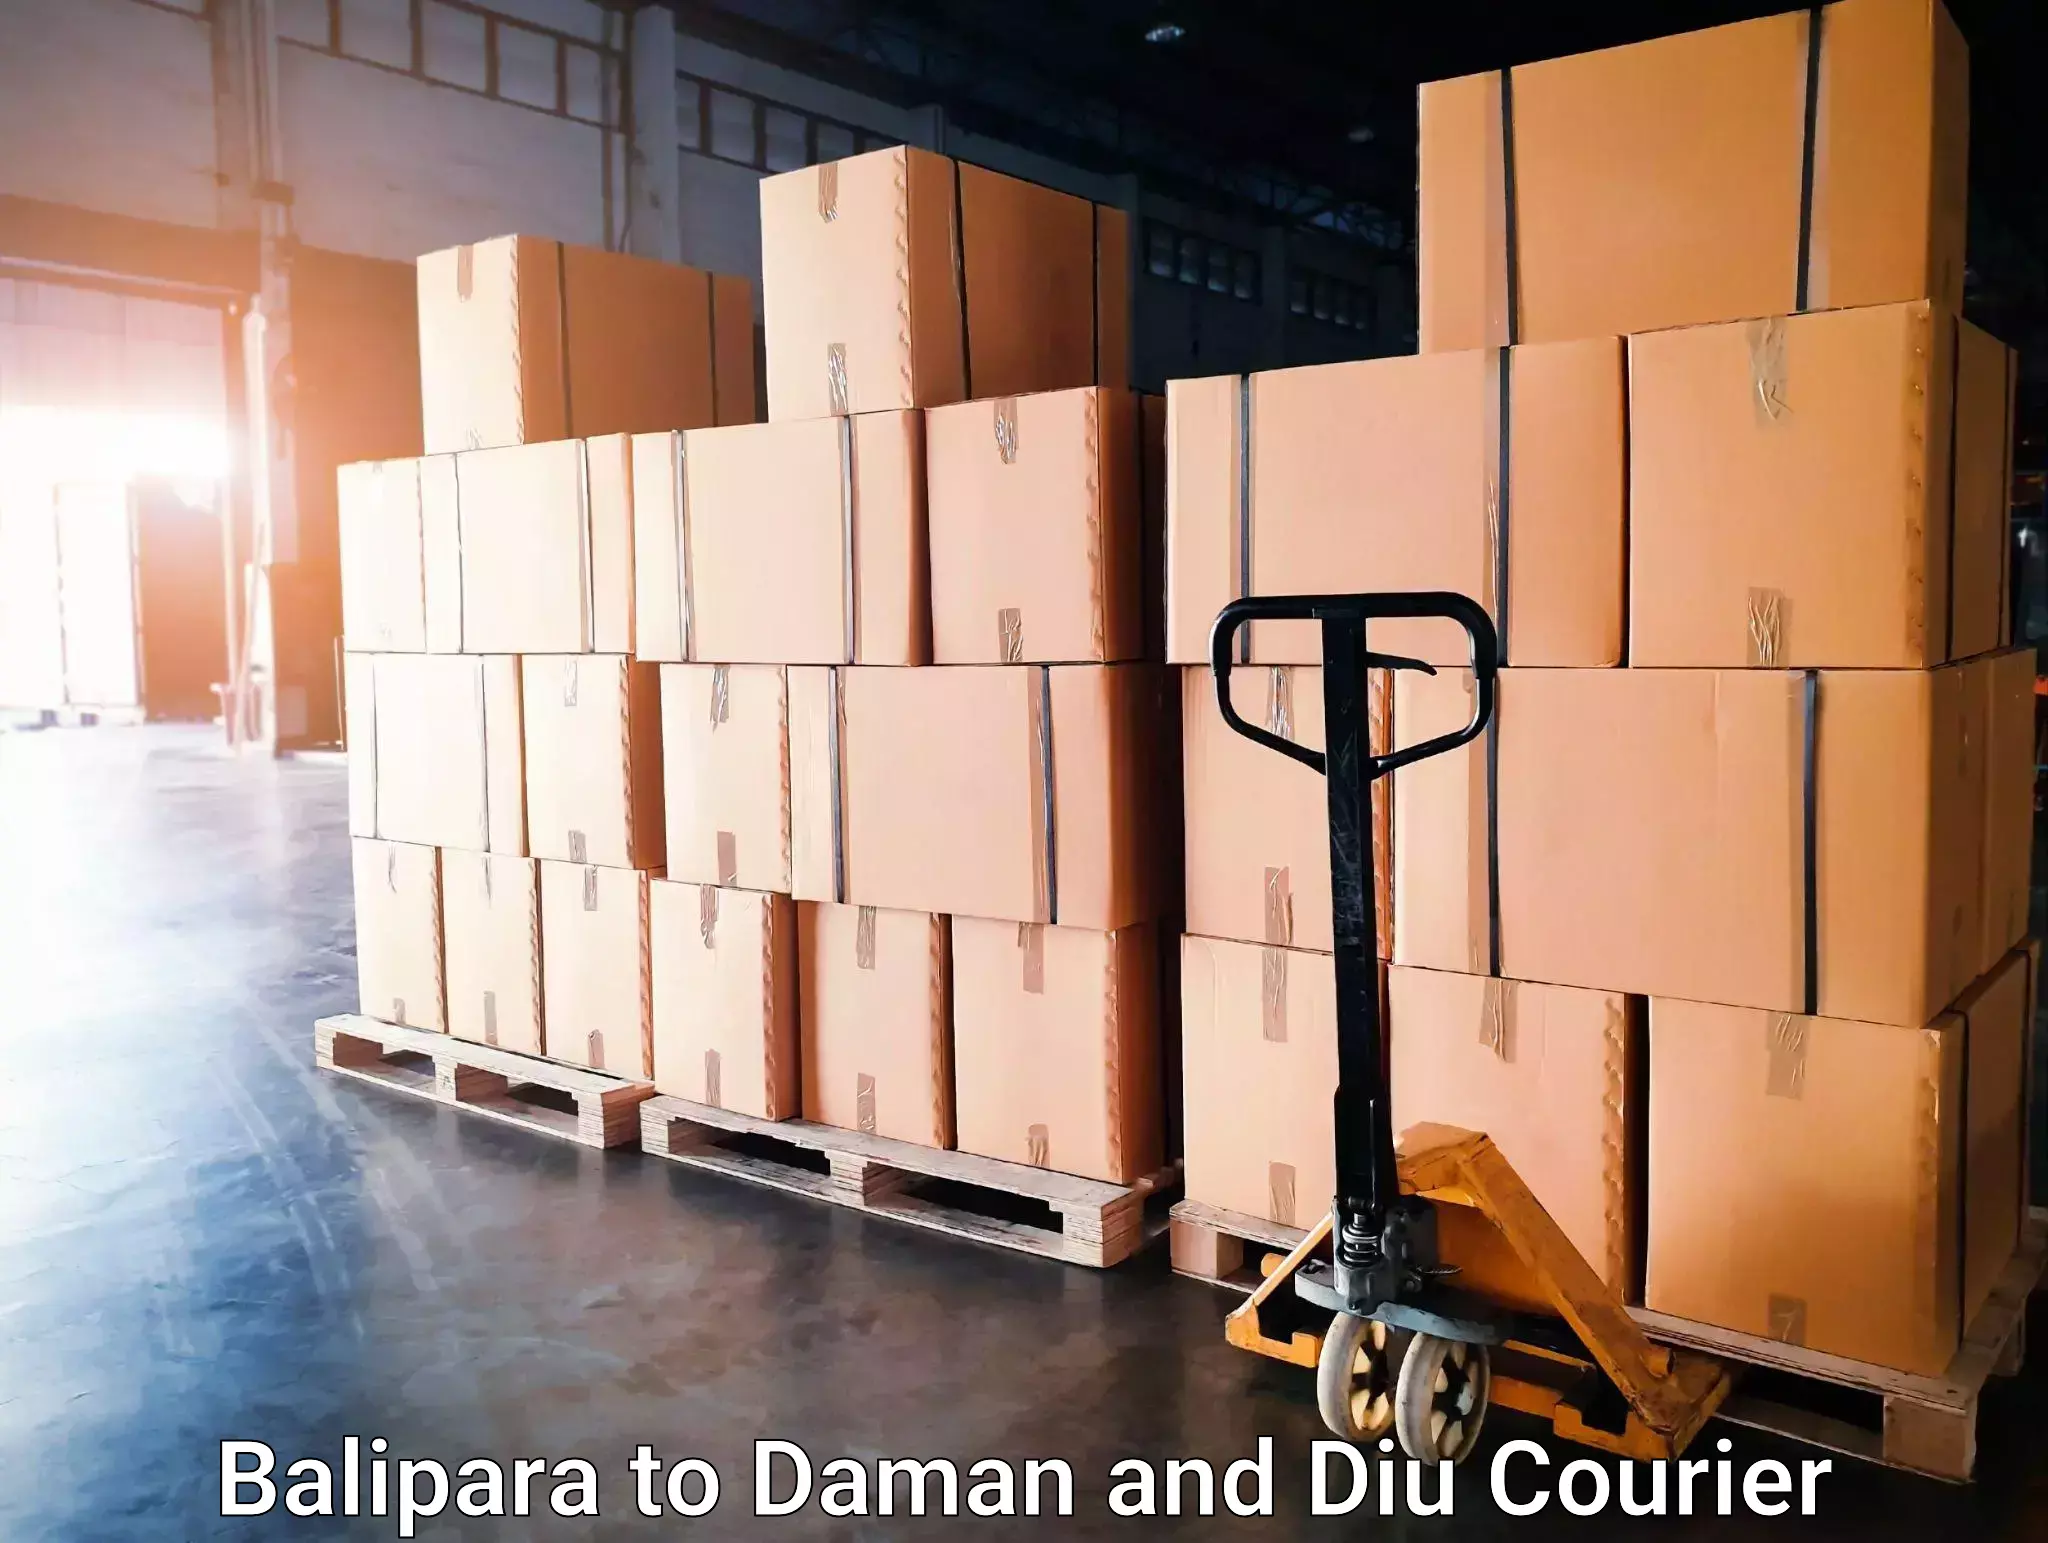 Courier service comparison Balipara to Daman